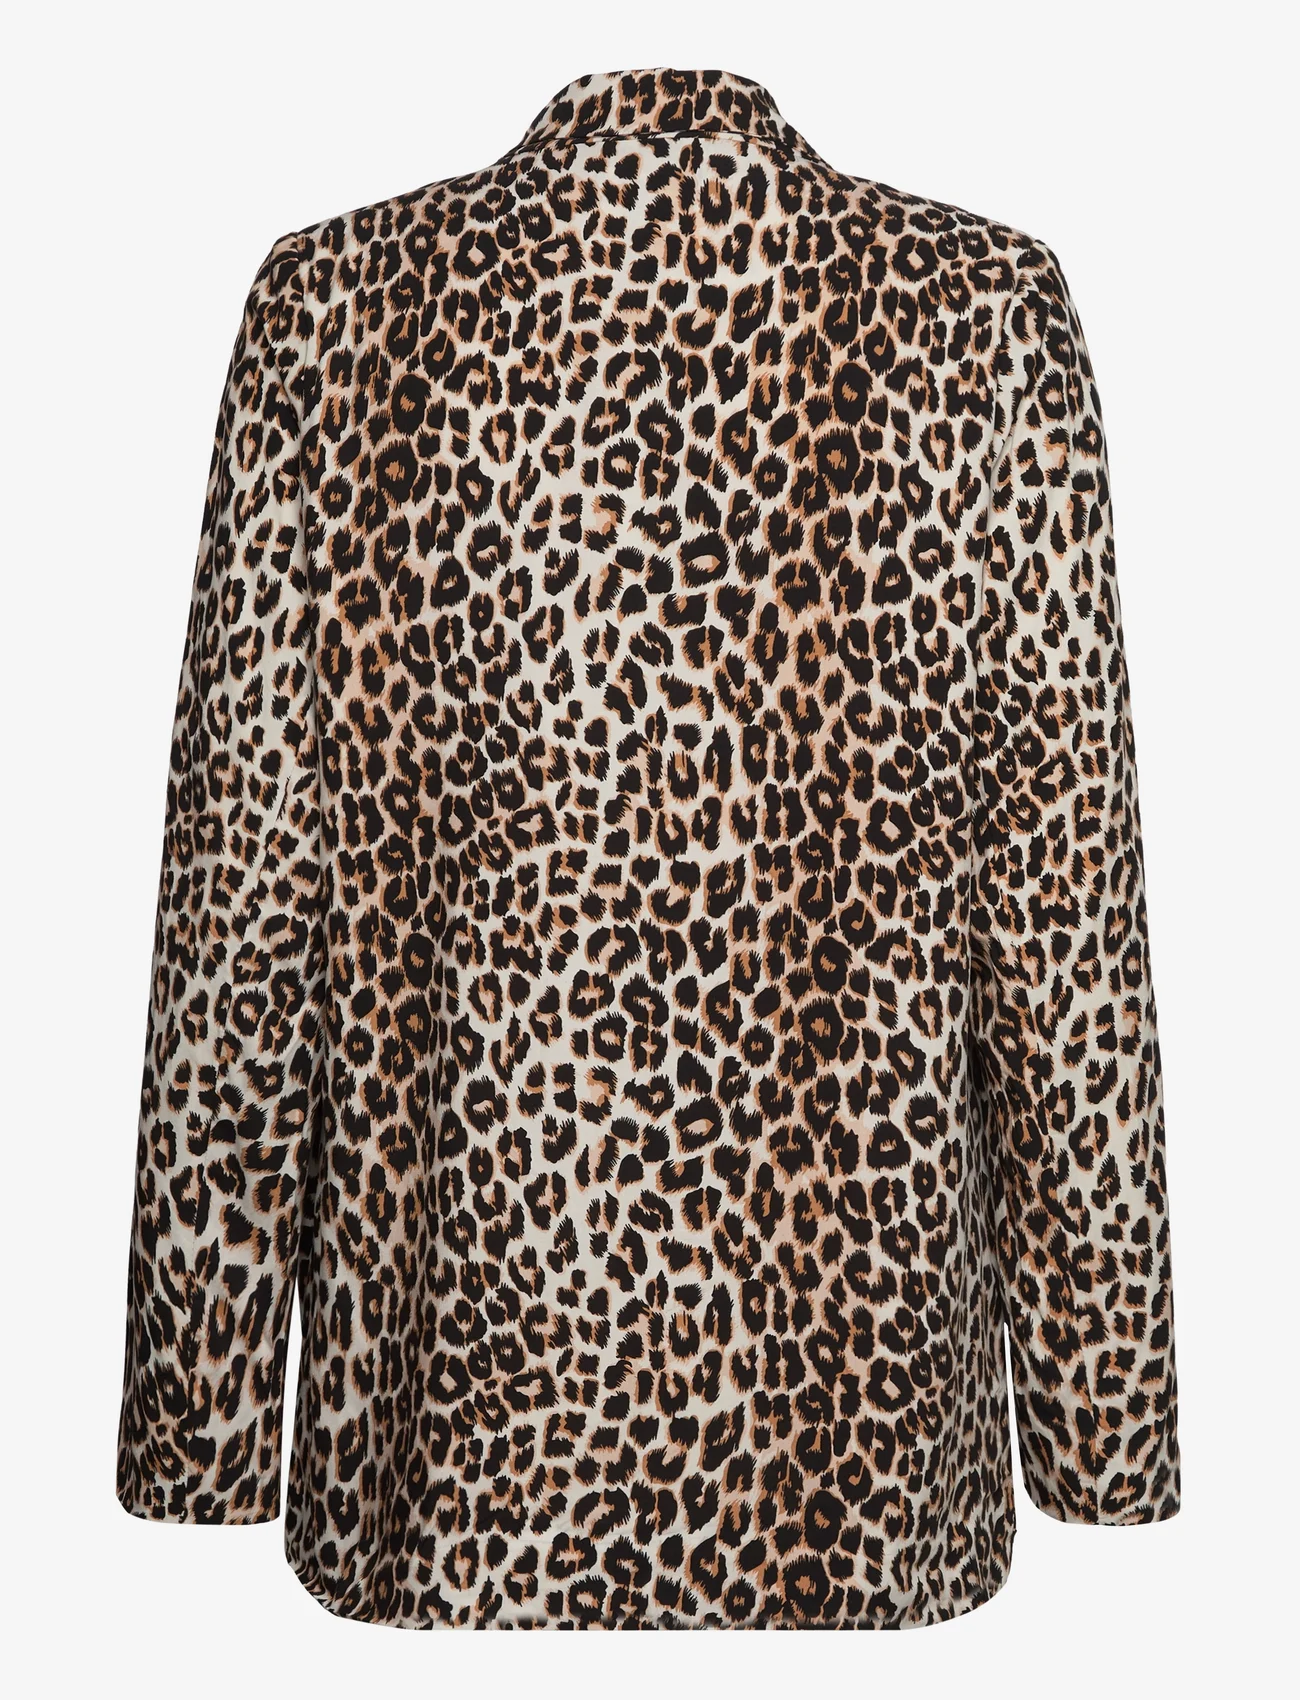 Lollys Laundry - Jolie Blazer - festkläder till outletpriser - 72 leopard print - 1